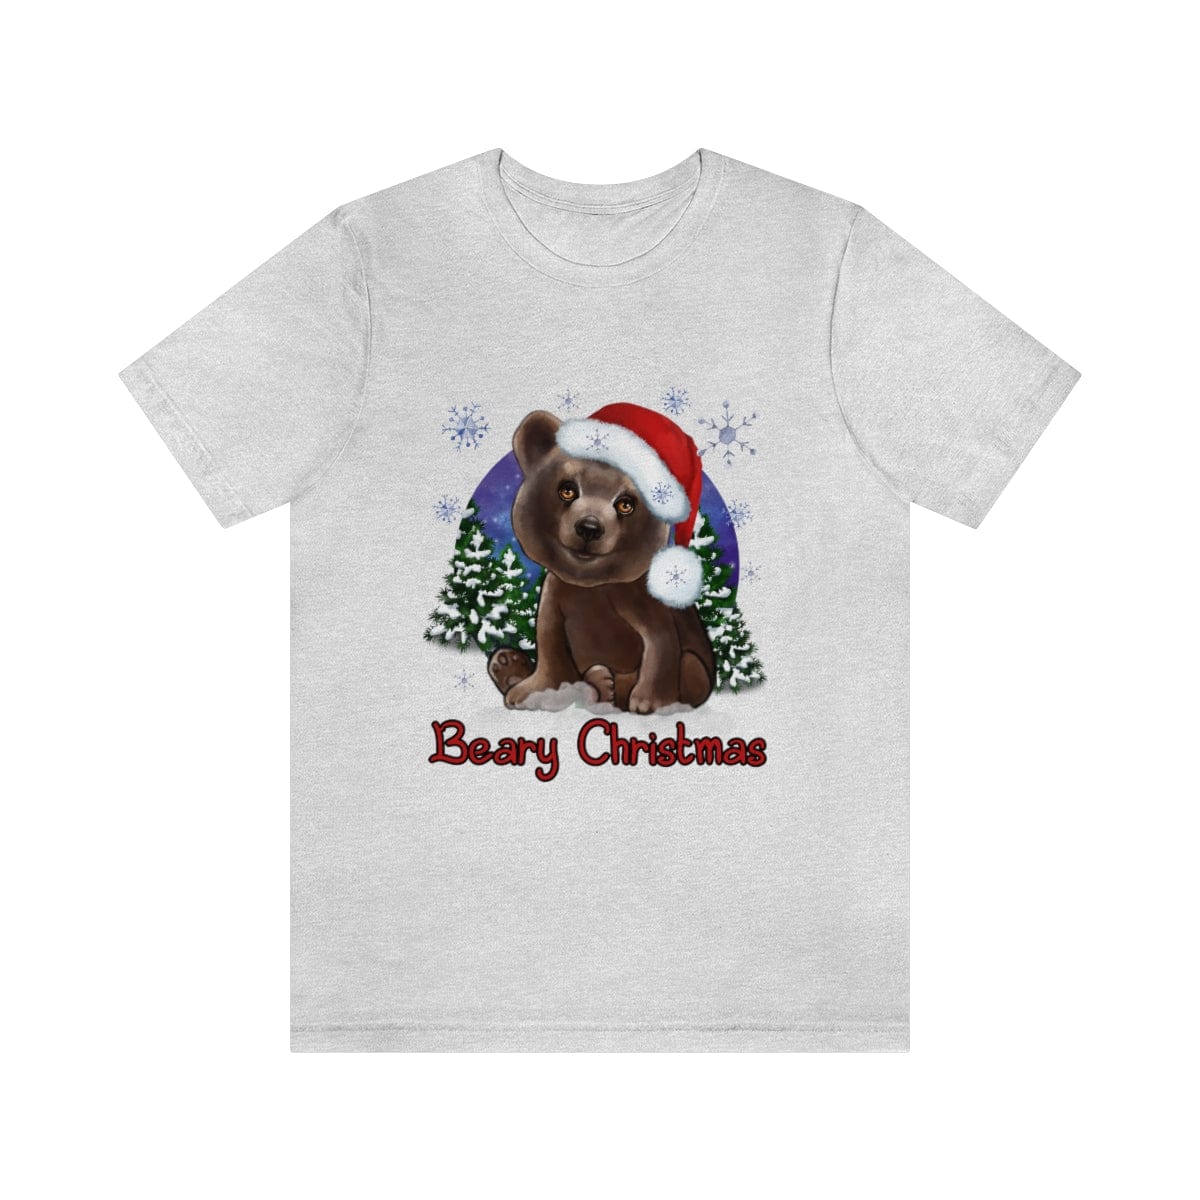 Printify T-Shirt Ash / S Winter Bear Cub Shirt, Winter Tshirts, Unisex Short Sleeve Tee, Graphic Tee, Cute Winter Shirts, Gift Teen, Christmas Gift, Free Shipping 33512300431782479424